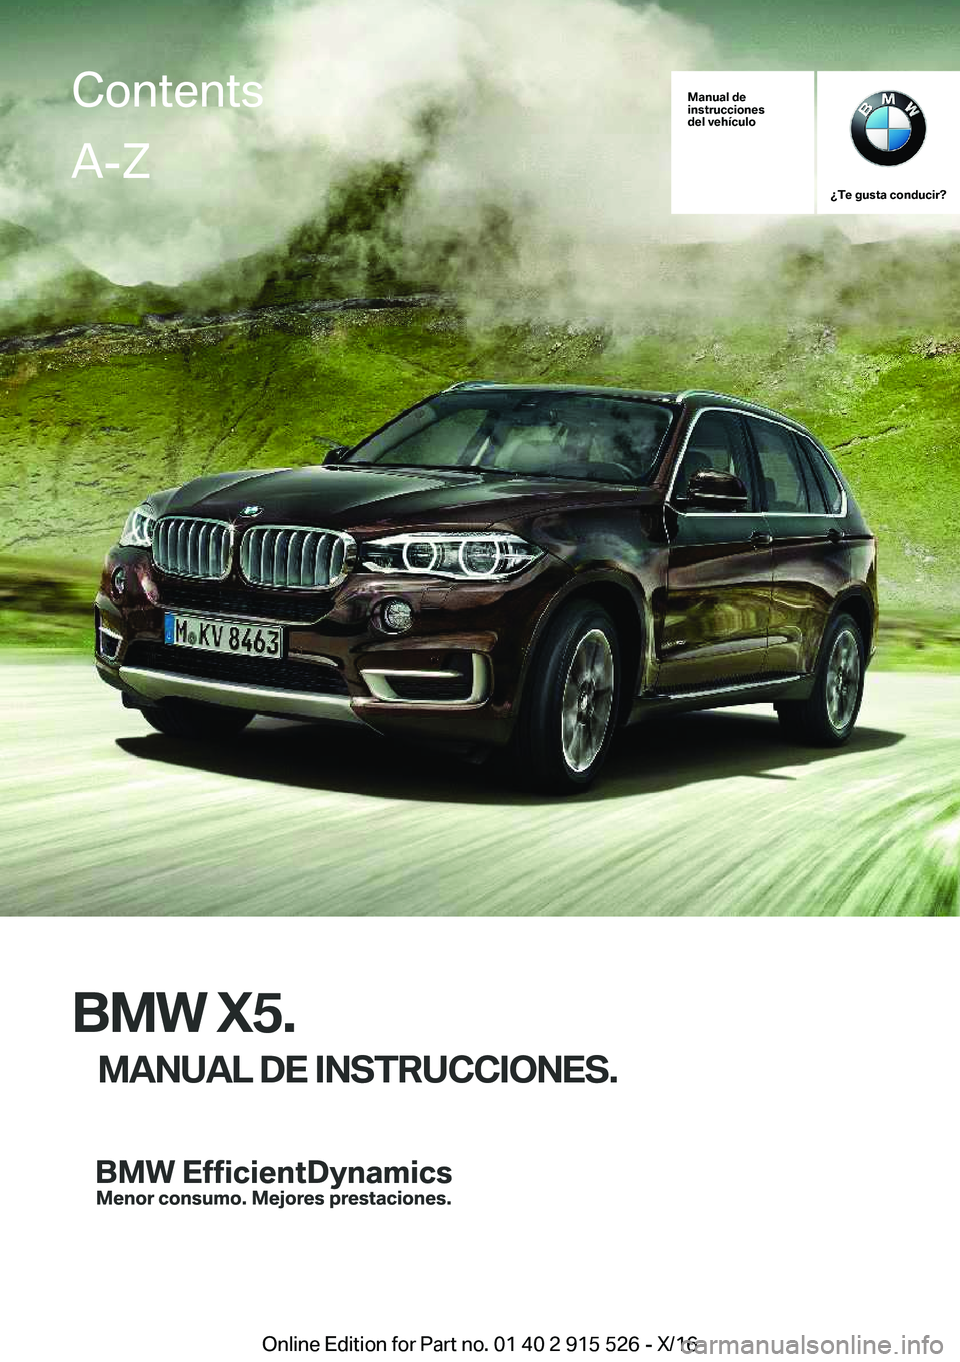 BMW X5 2017  Manuales de Empleo (in Spanish) �M�a�n�u�a�l��d�e
�i�n�s�t�r�u�c�c�i�o�n�e�s
�d�e�l��v�e�h�